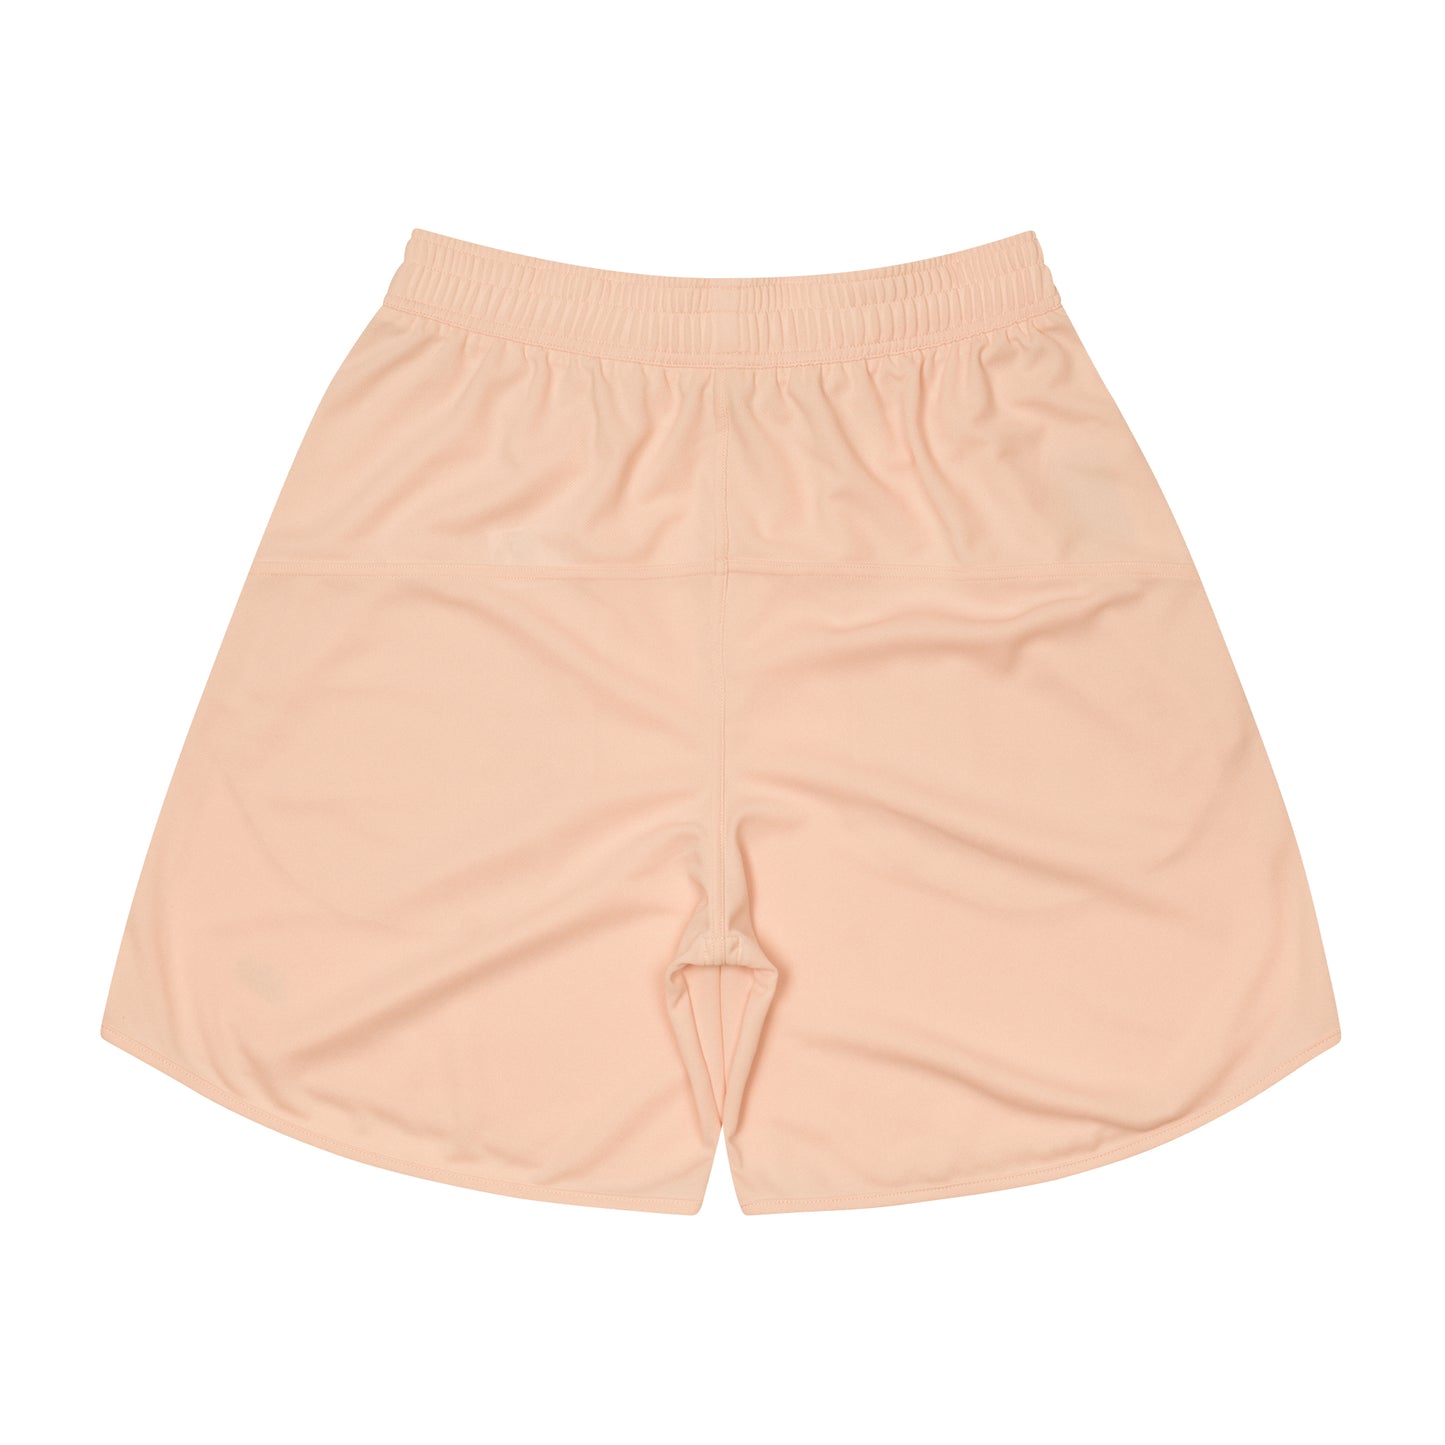 Basic Zip Shorts (peach/white)